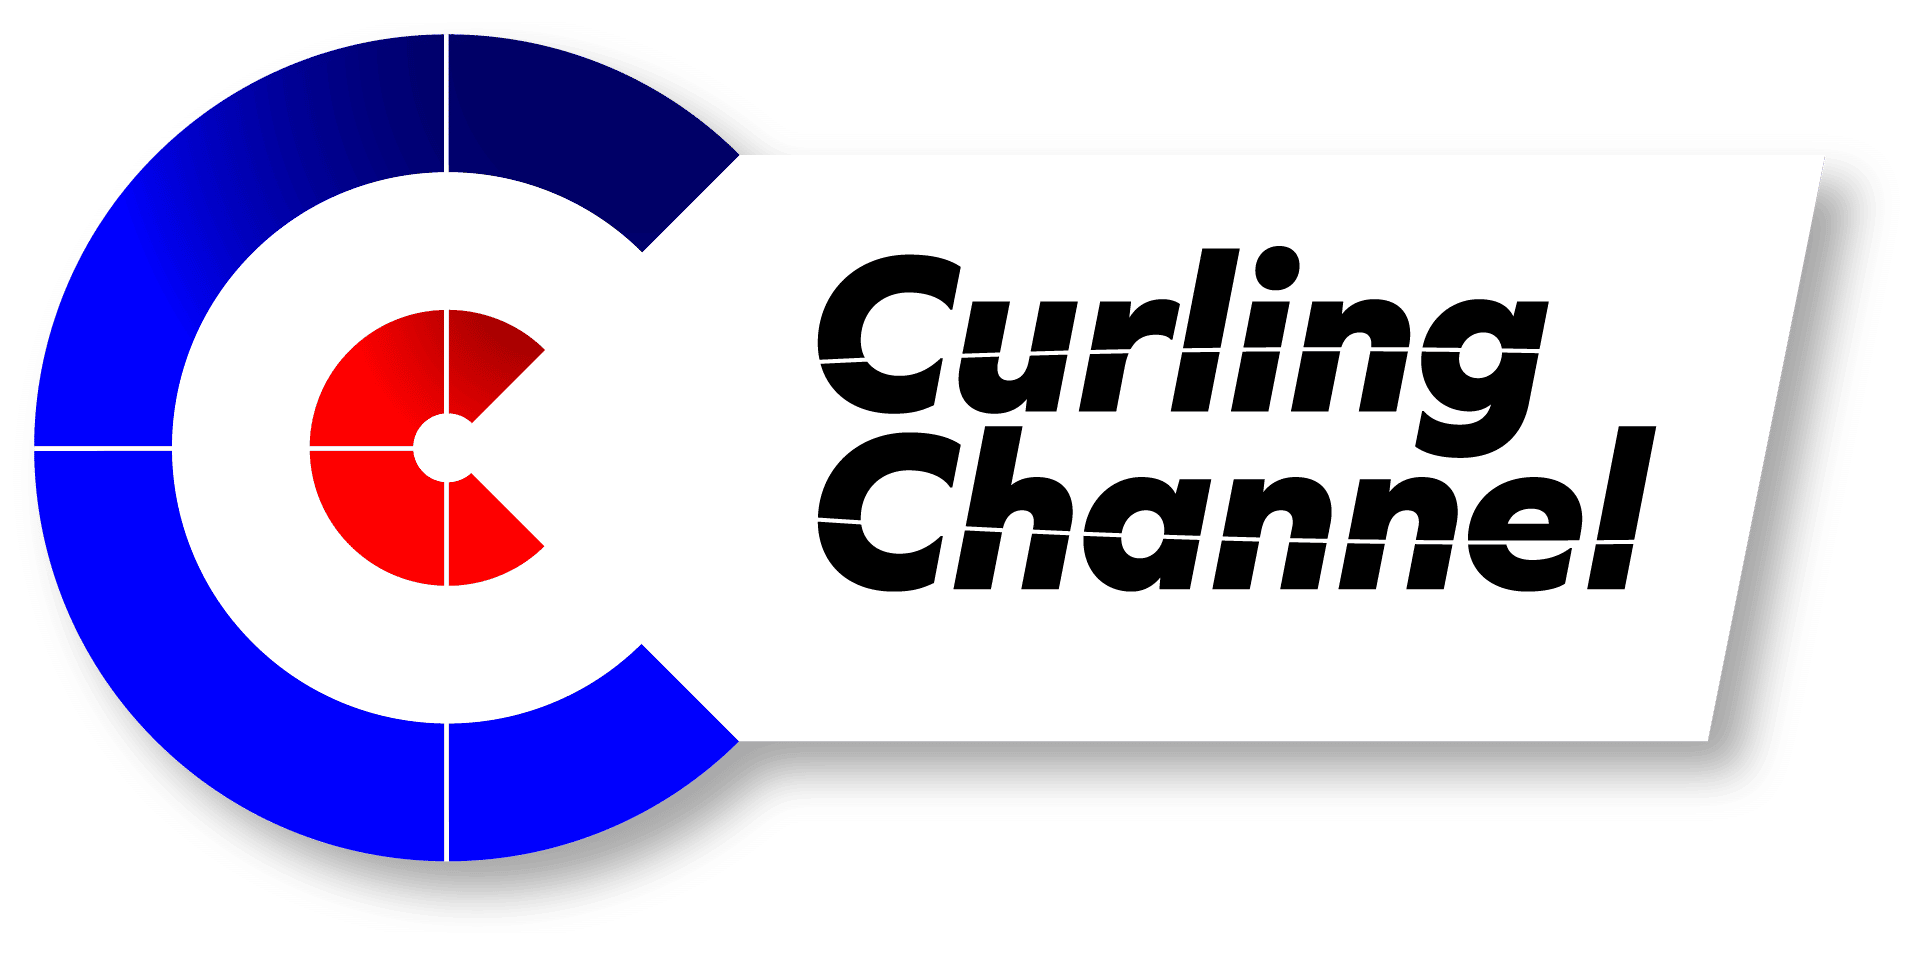 world curling tv channel